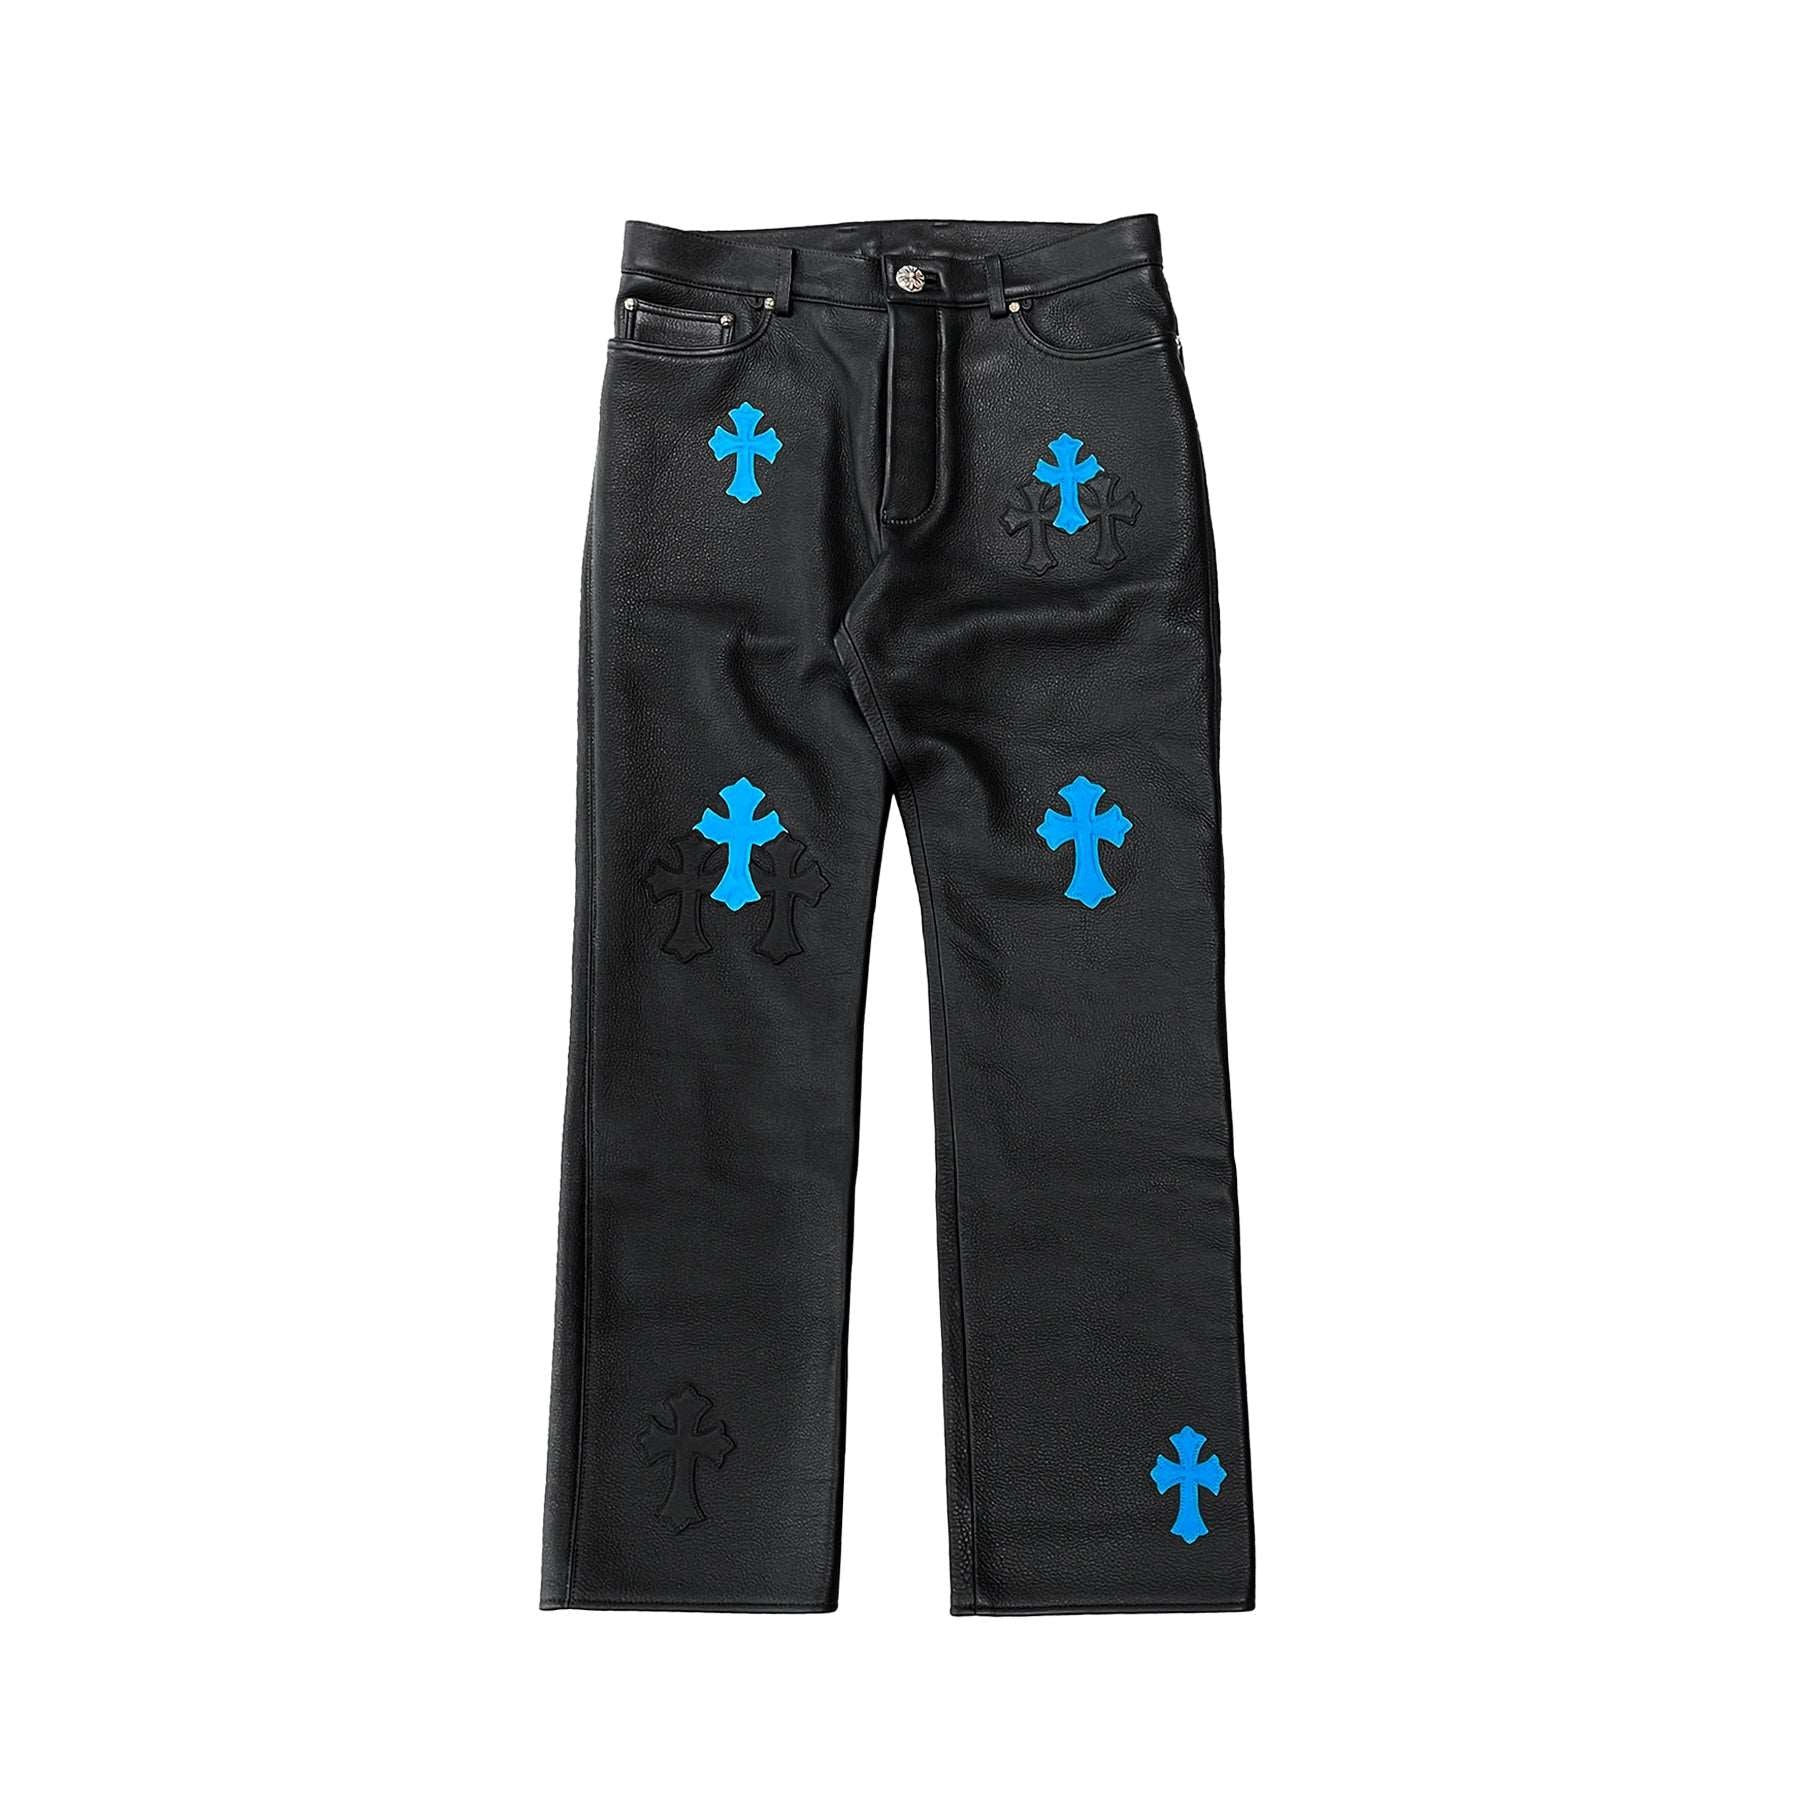 Chrome Hearts Blue Leather Cross Patch Leather Pants - SHENGLI ROAD MARKET